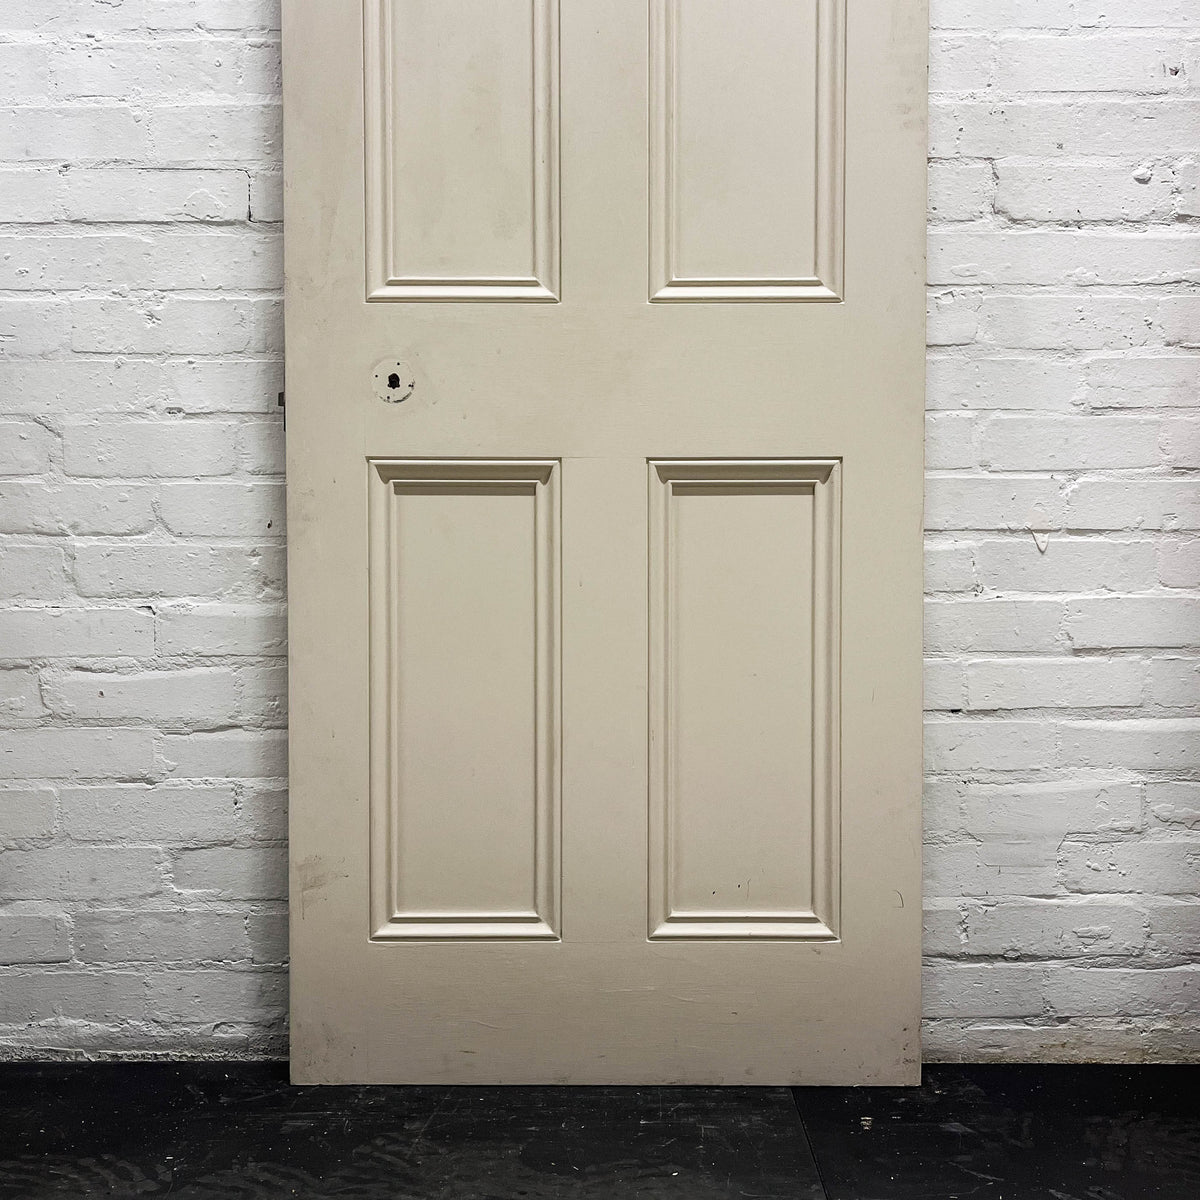 Victorian 4 Panel Antique Door - 204cm x 75.5cm | The Architectural Forum